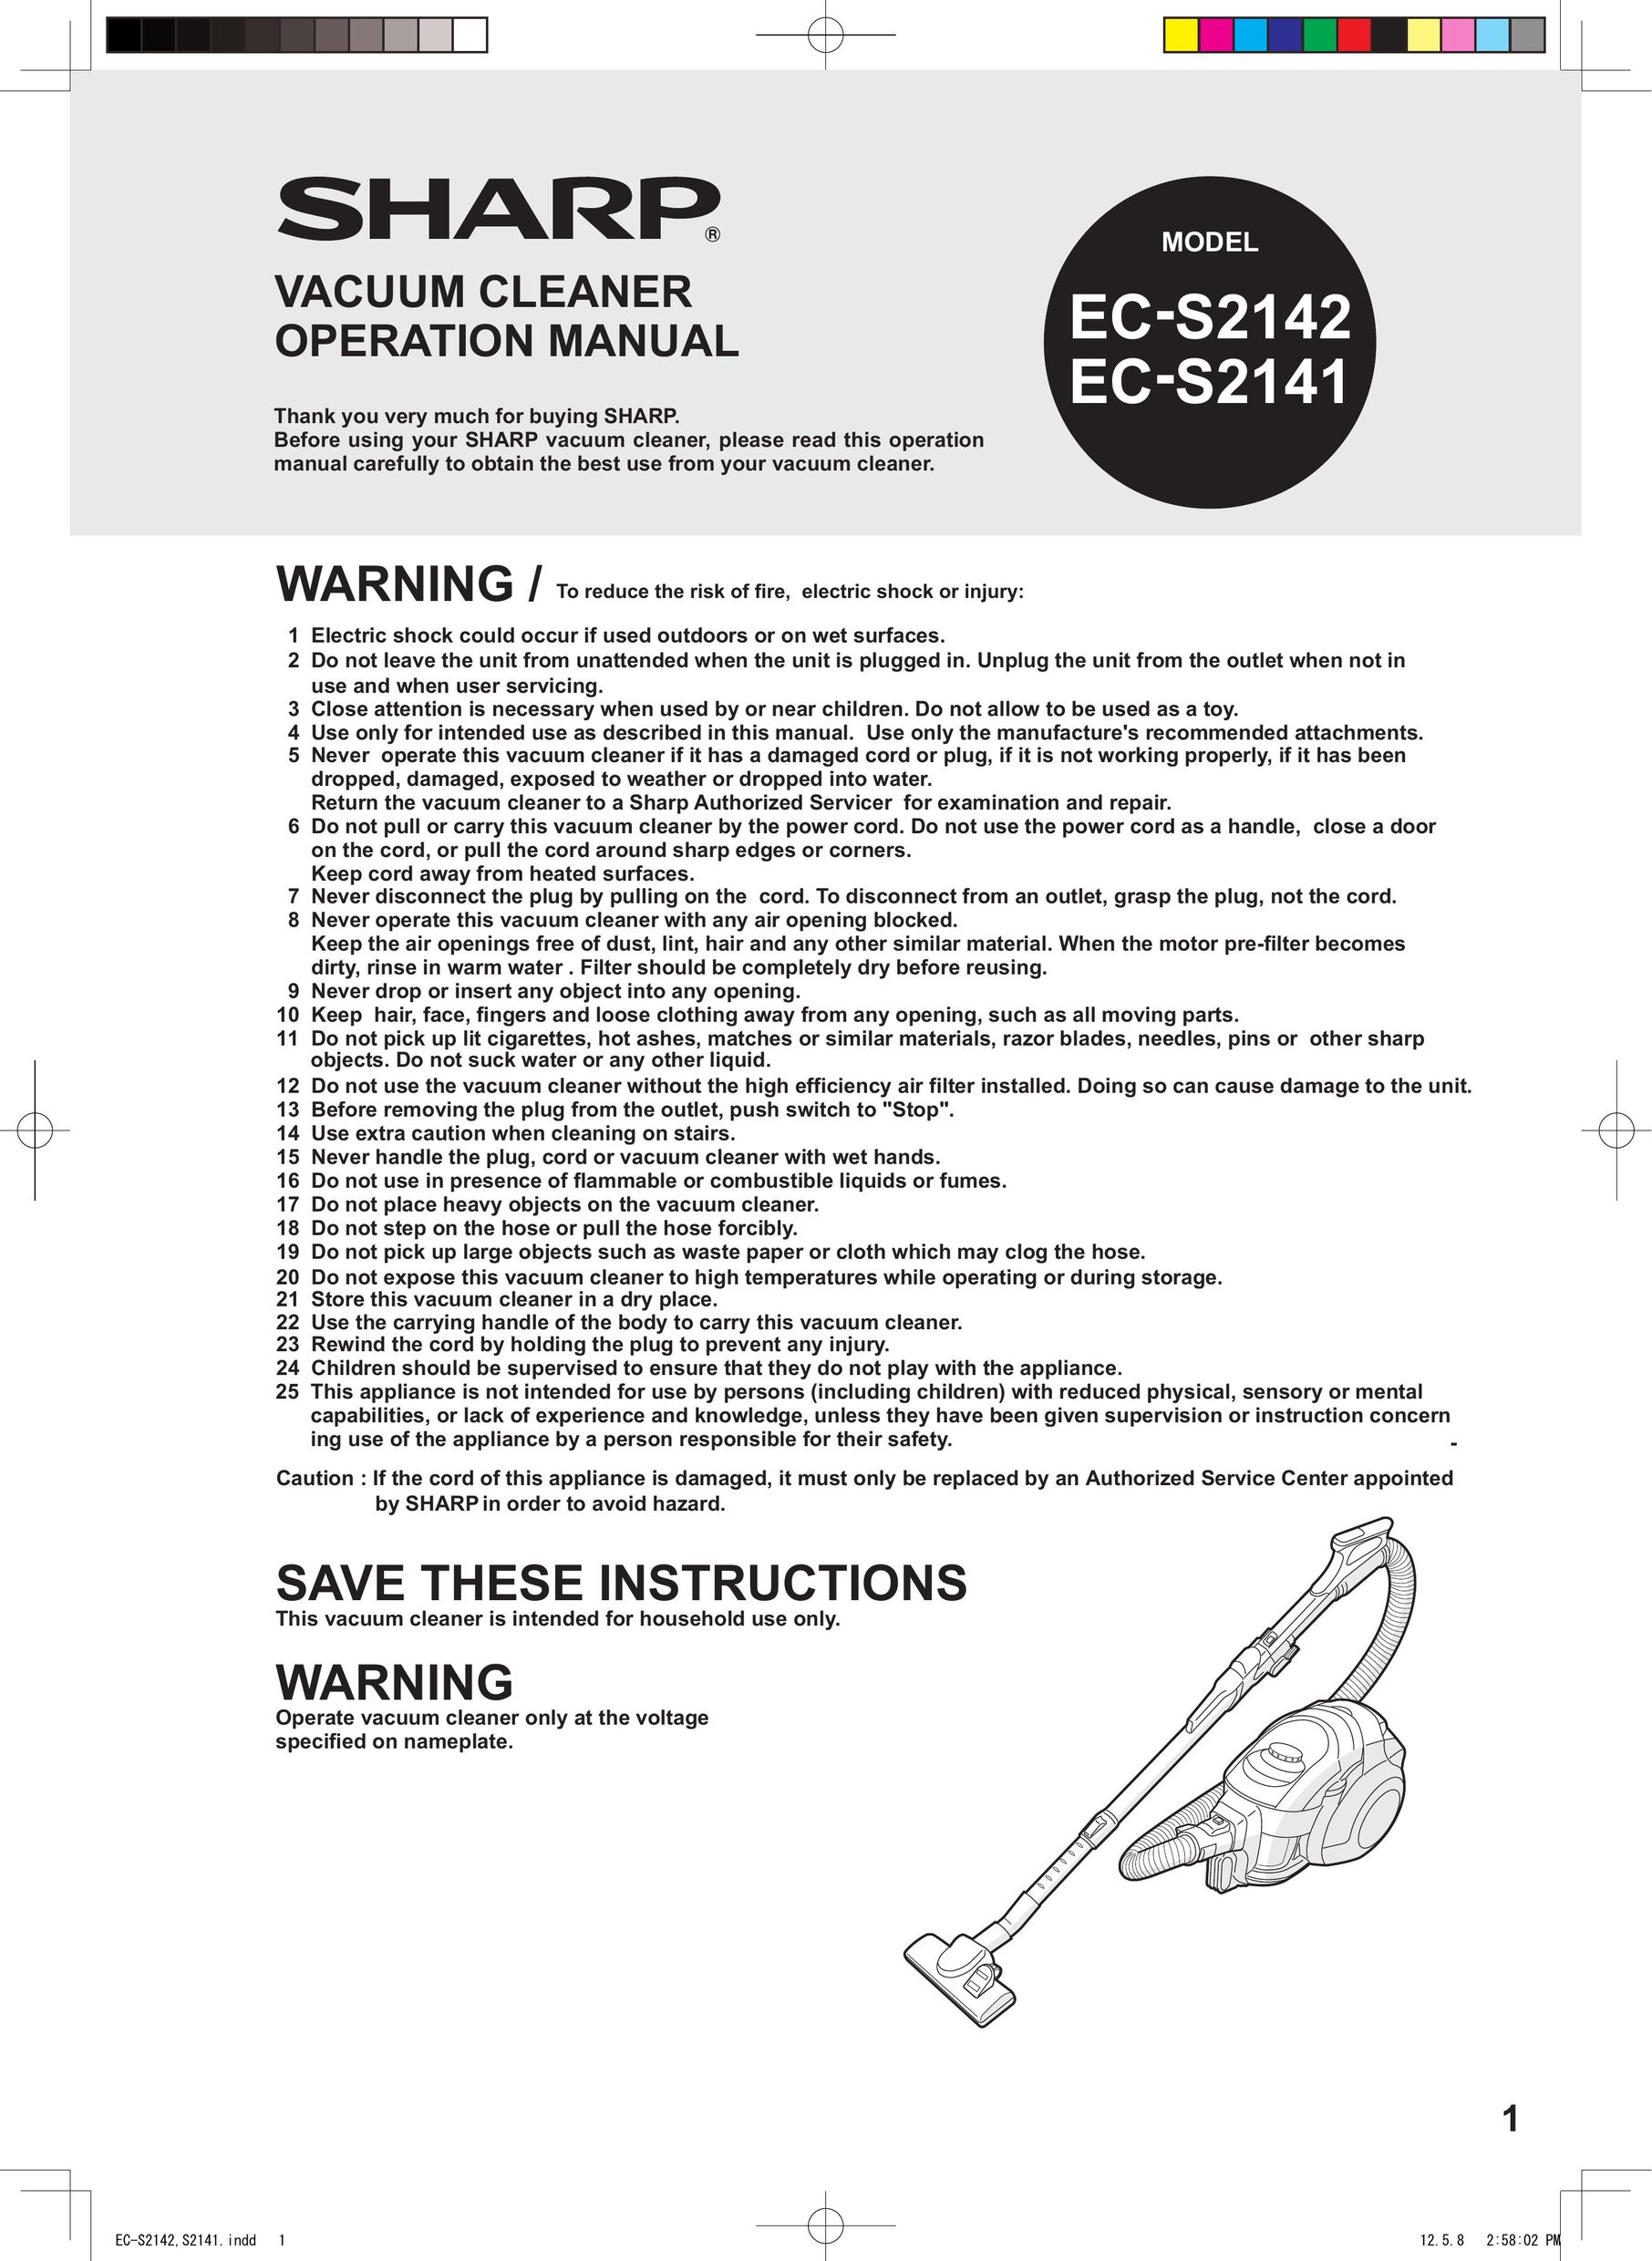 Sharp EC-S2141 Vacuum Cleaner User Manual